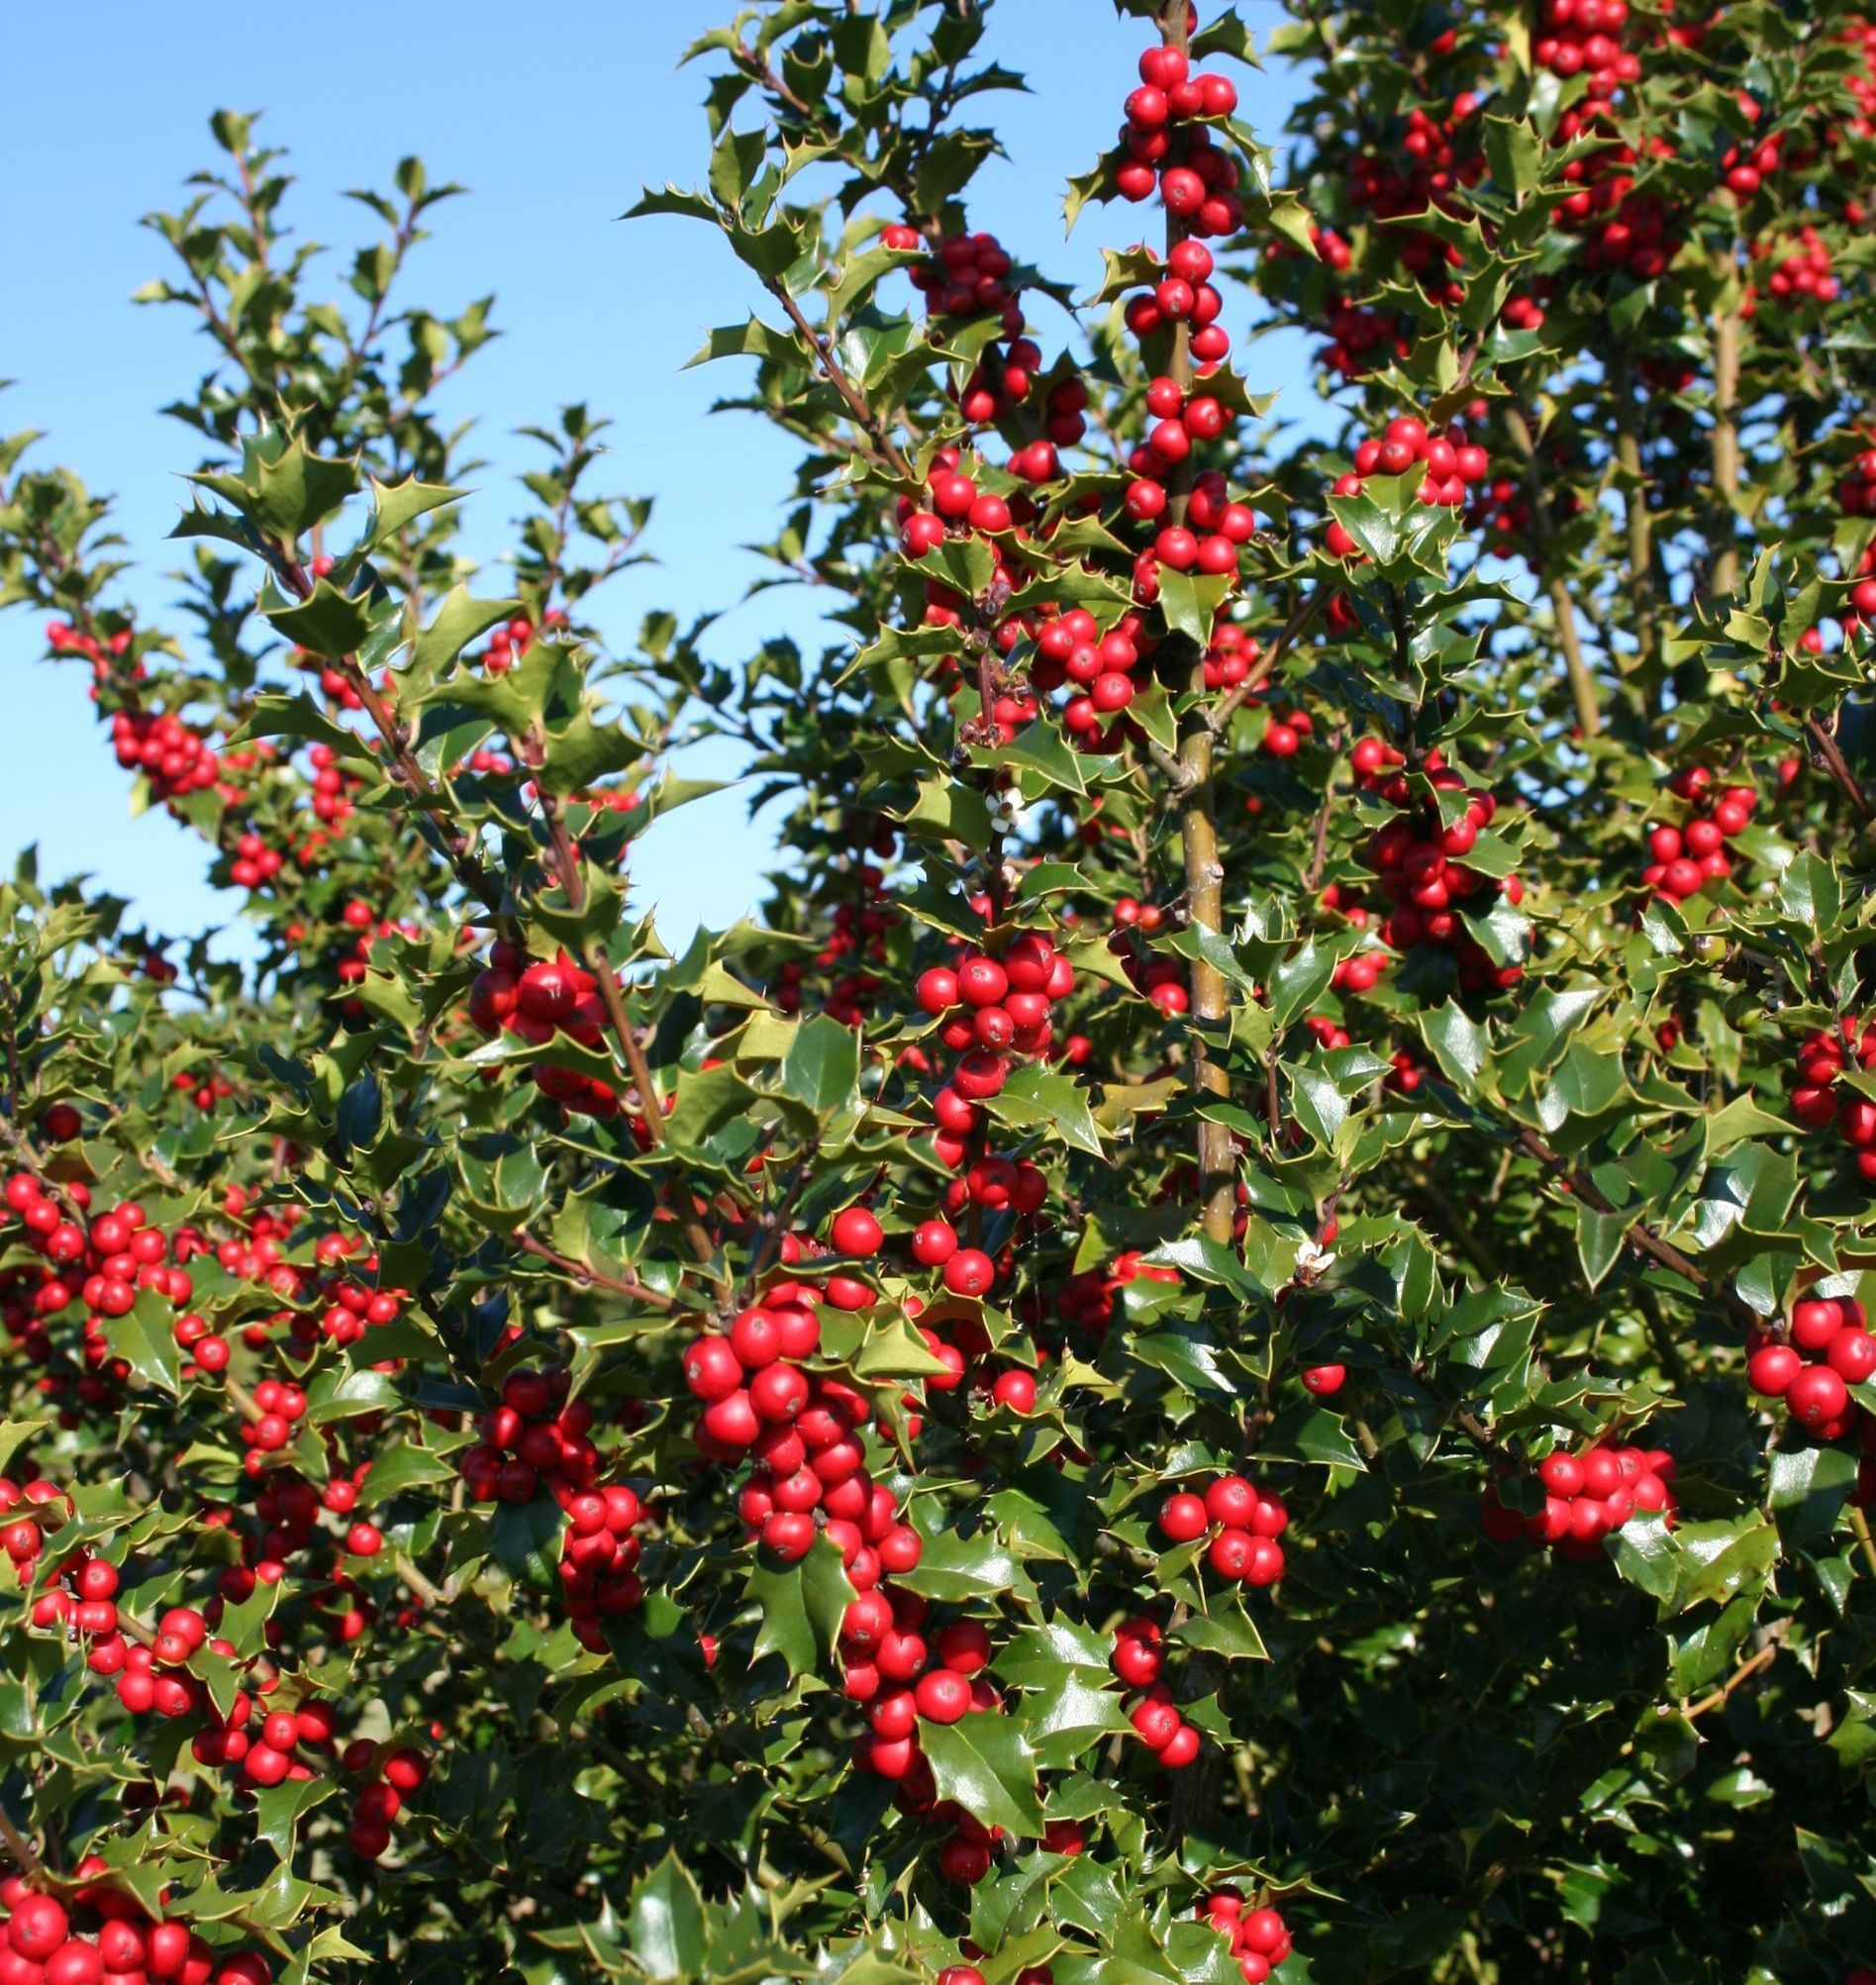 Red Beauty Holly bush shrub Ilex meserveae